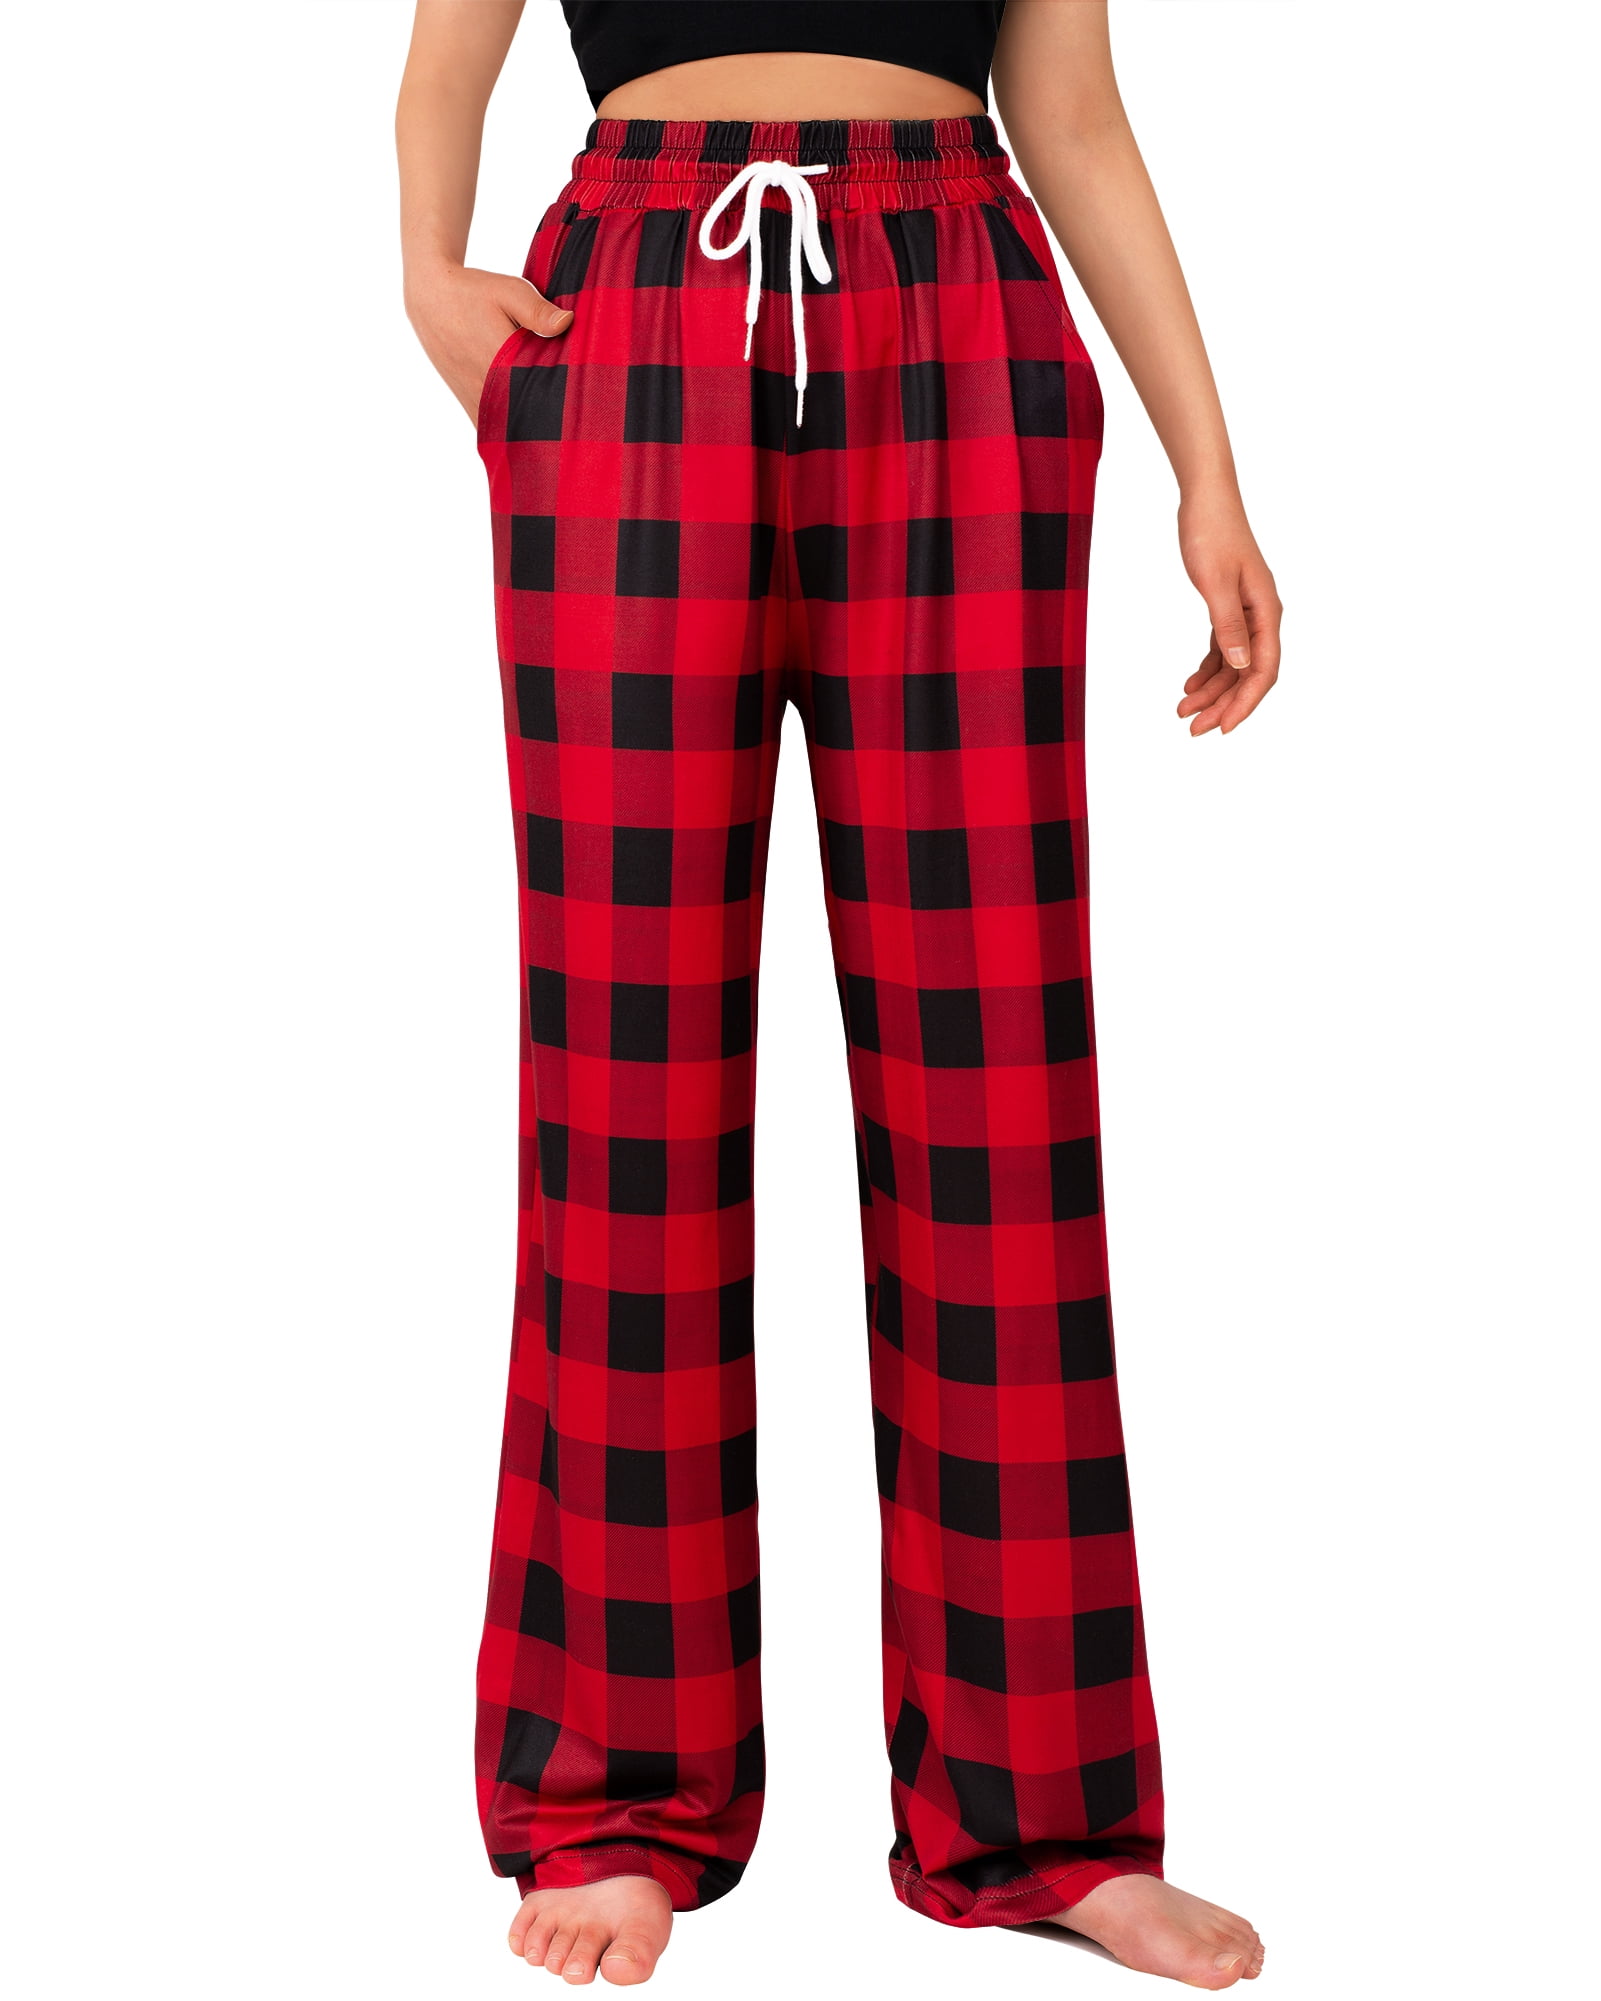 Siliteelon Womens Pajama Pants with Pockets Cotton Drawstring Classic Red  Plaid Pants